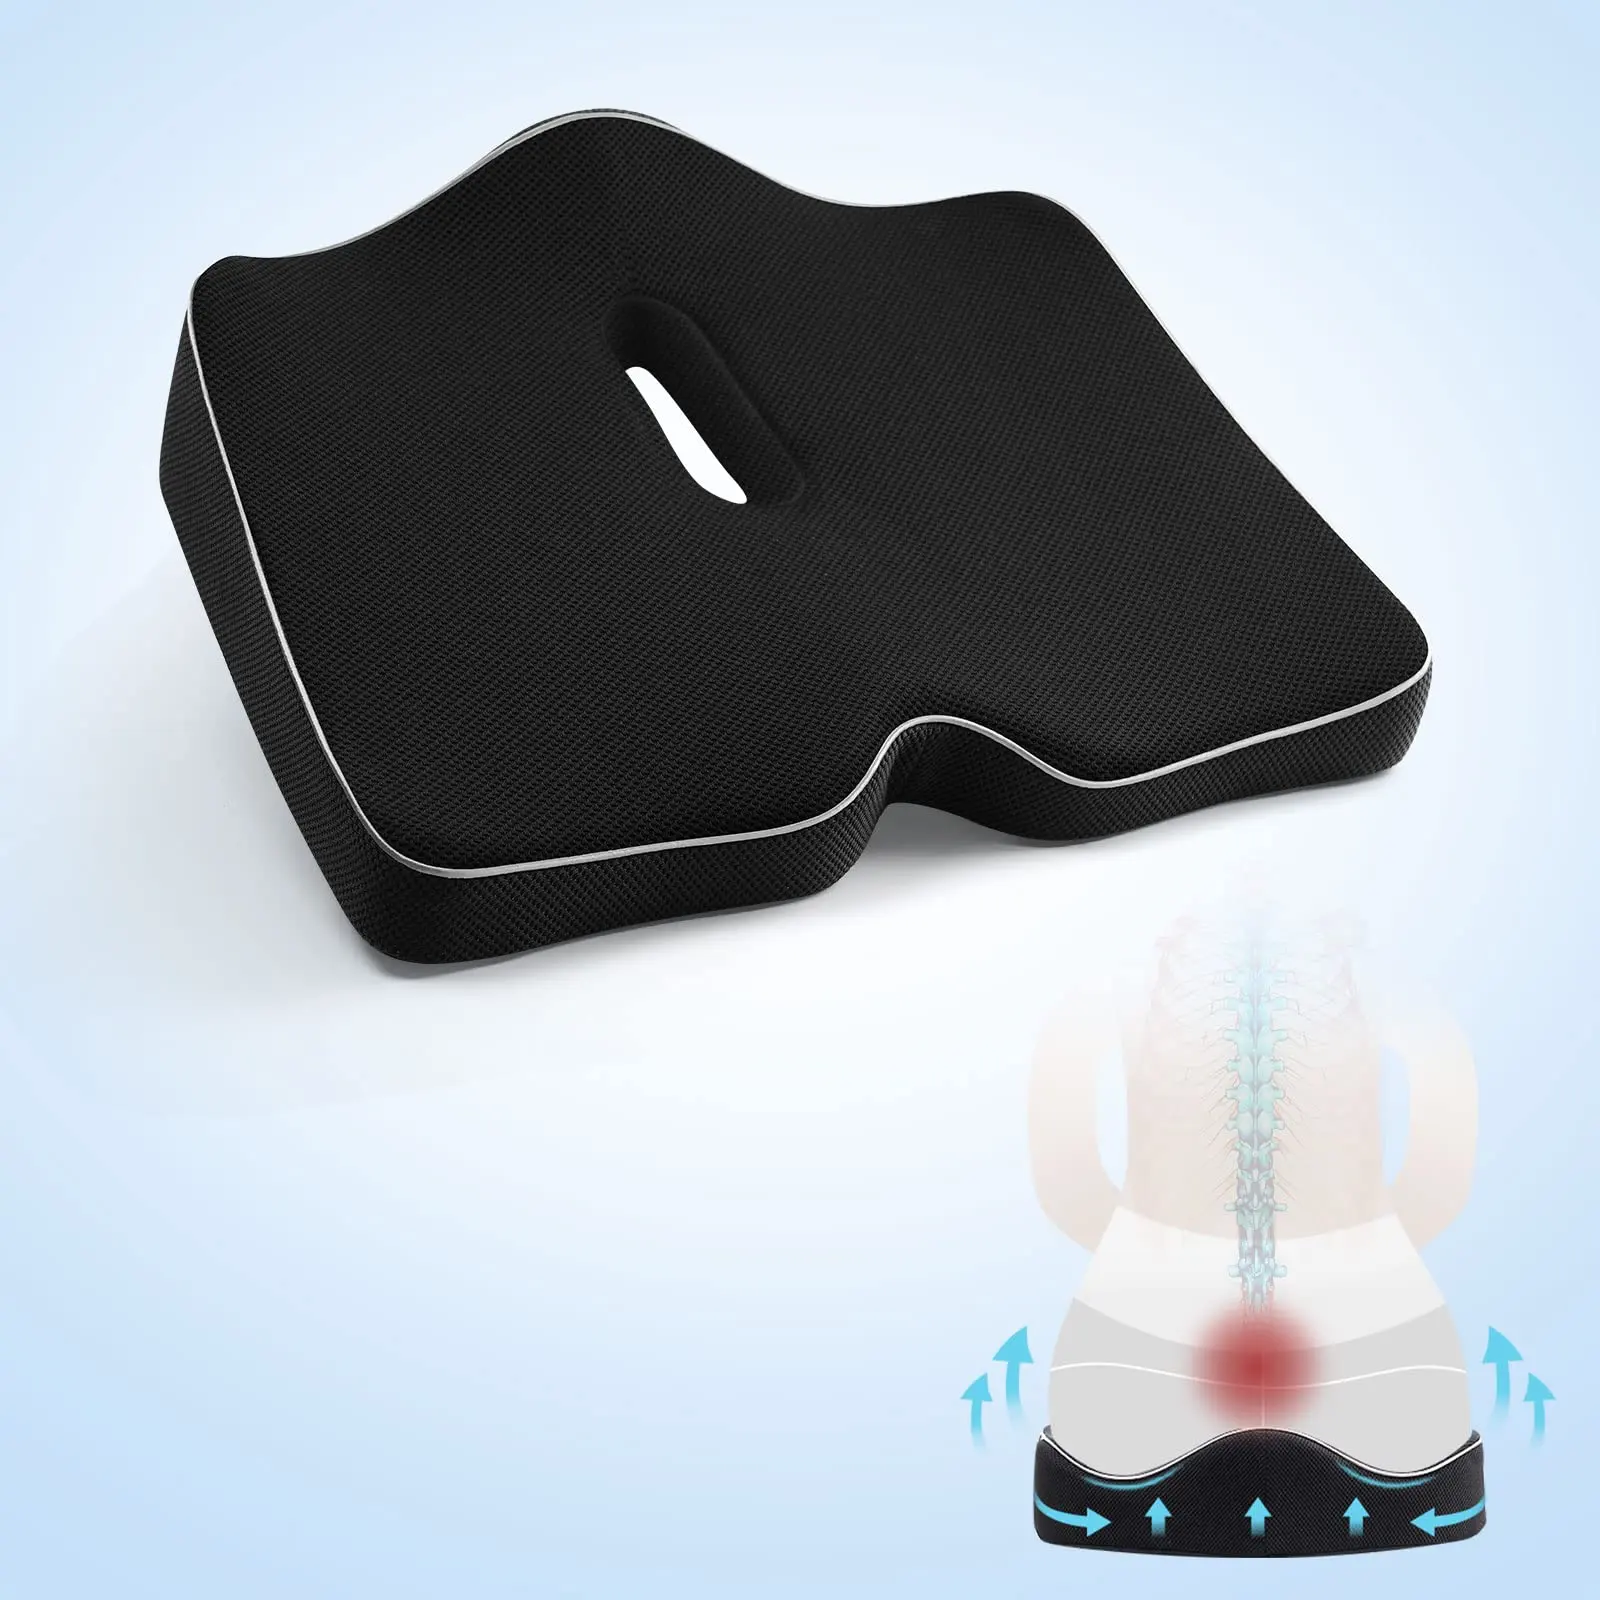 Brand New Premium Memory Foam Padded Seat Cushion Reducing Pressure Points